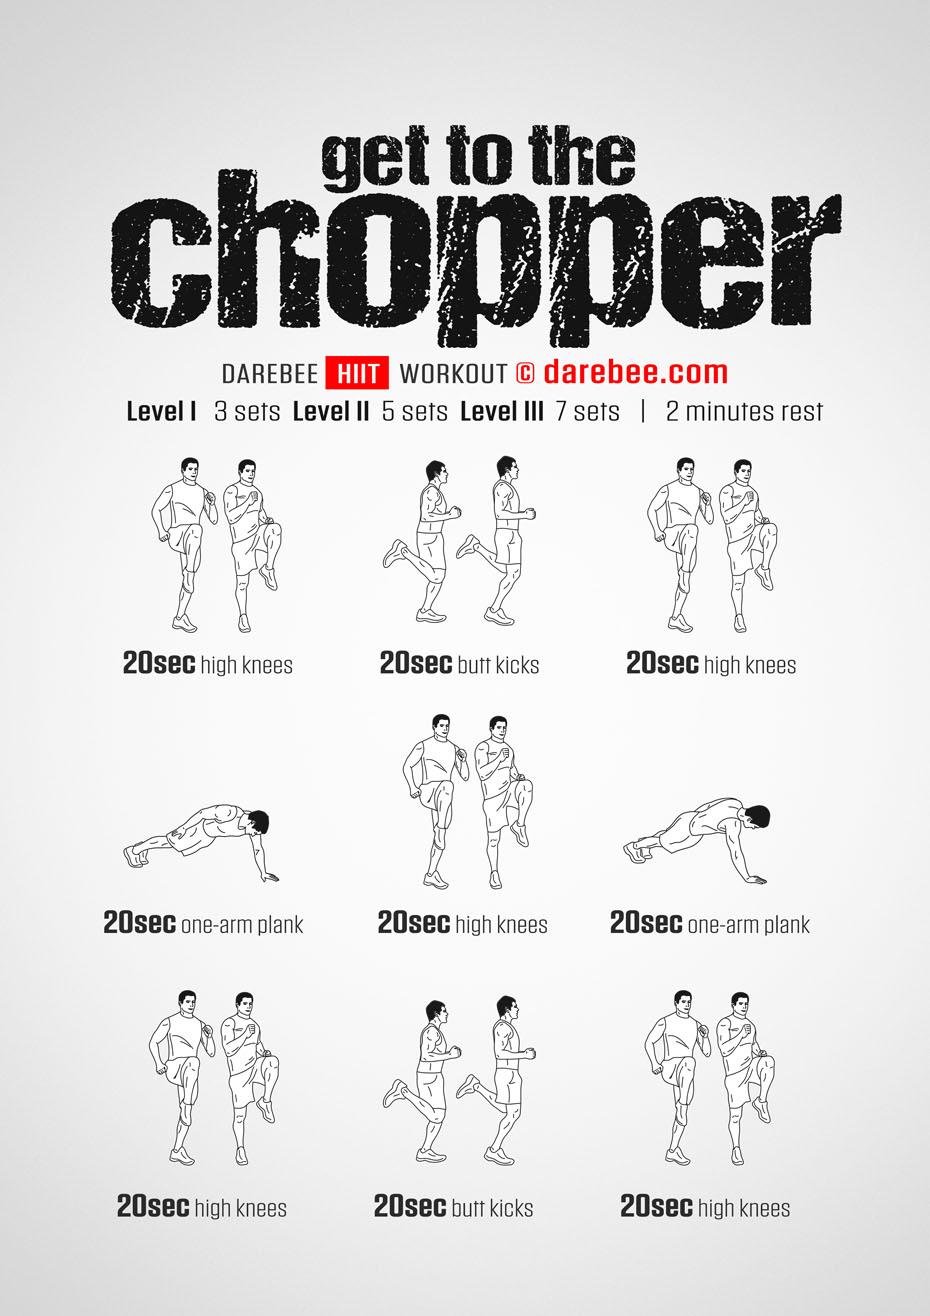 https://darebee.com/images/workouts/chopper-workout.jpg